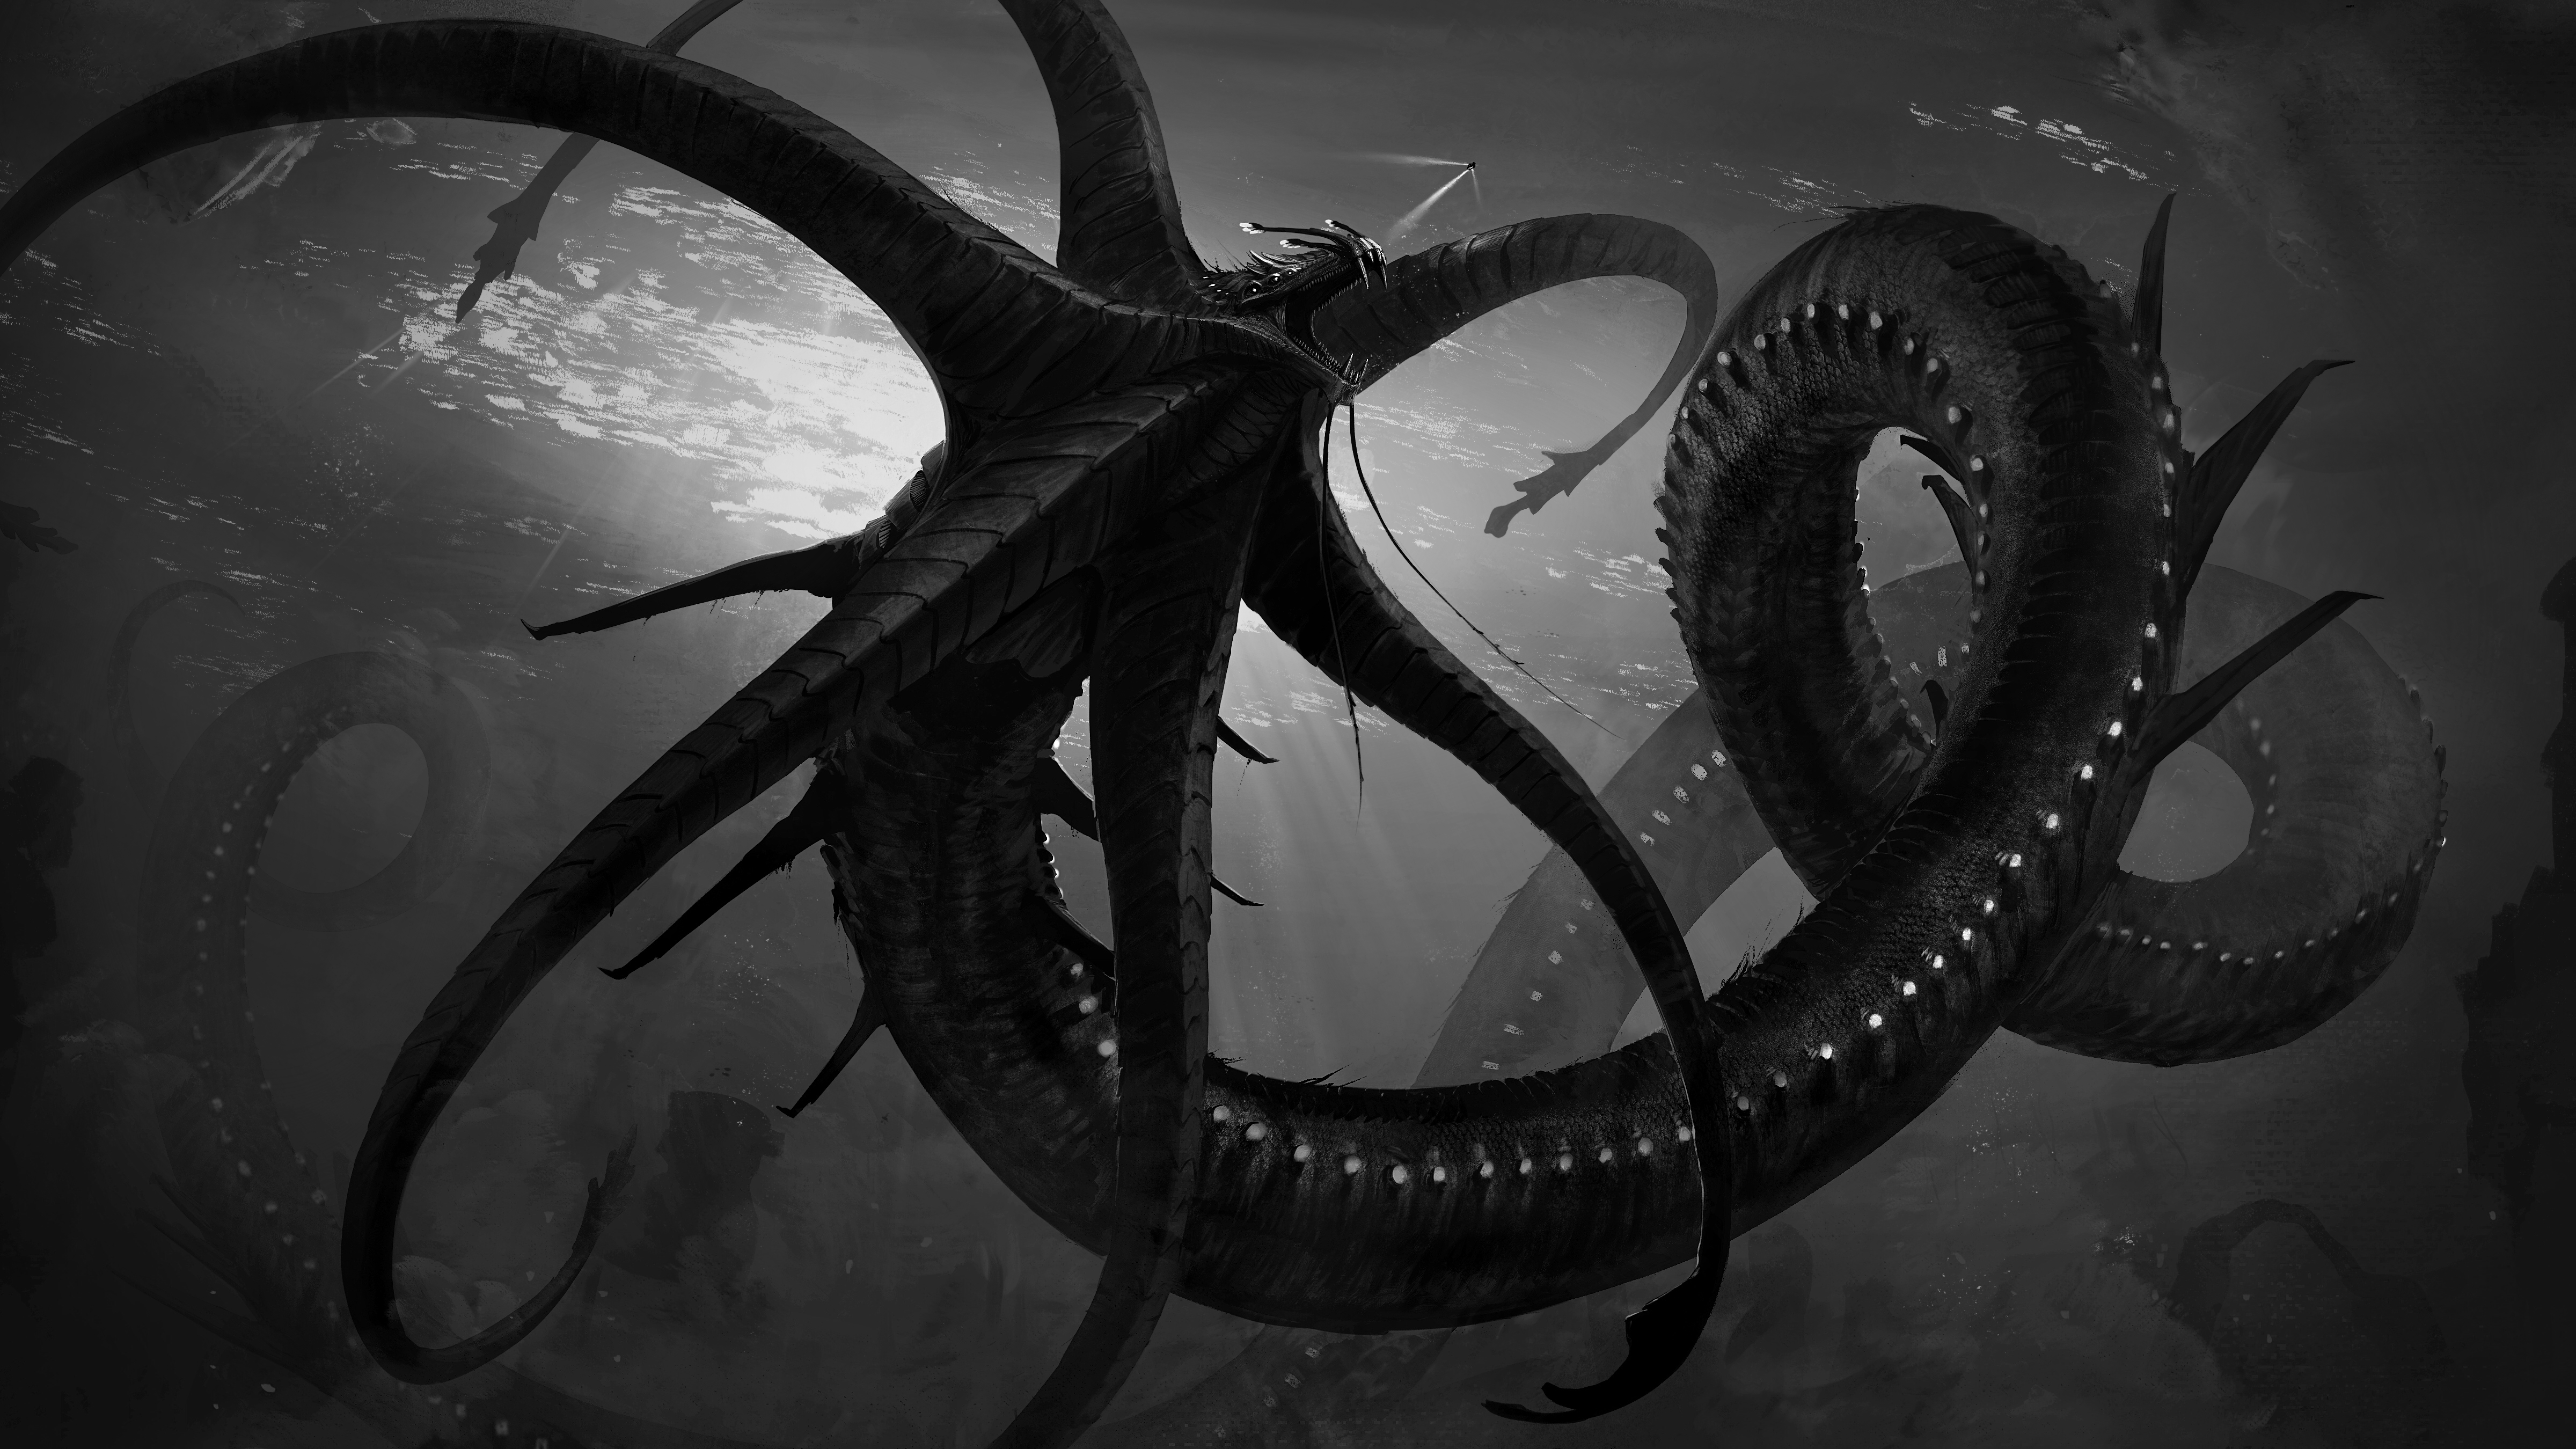 Creature Sea Monster Underwater 4800x2700